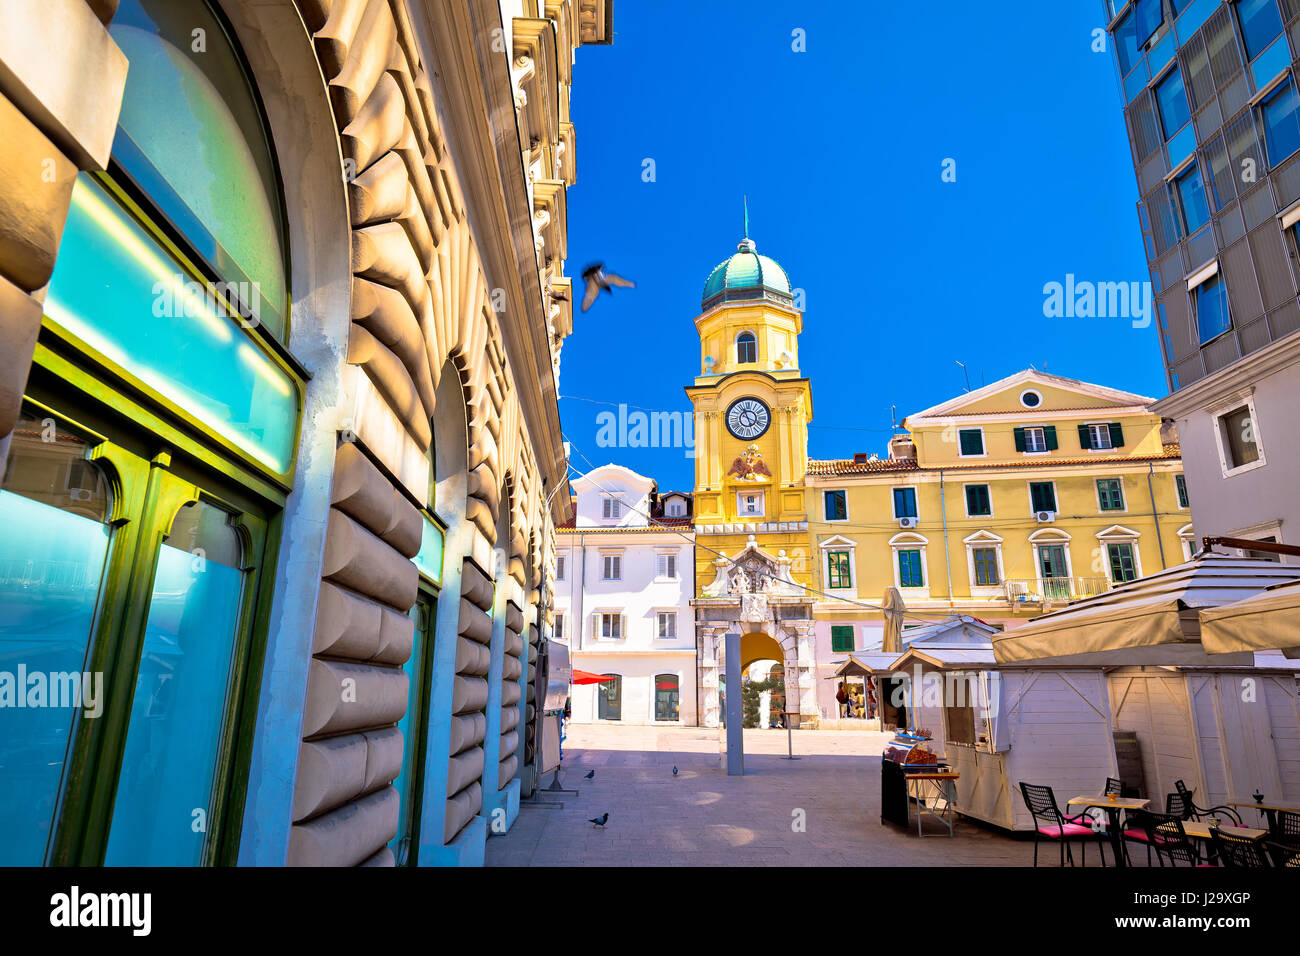 City of Rijeka main square and clock tower view, Kvarner bay, Croatia Stock Photo